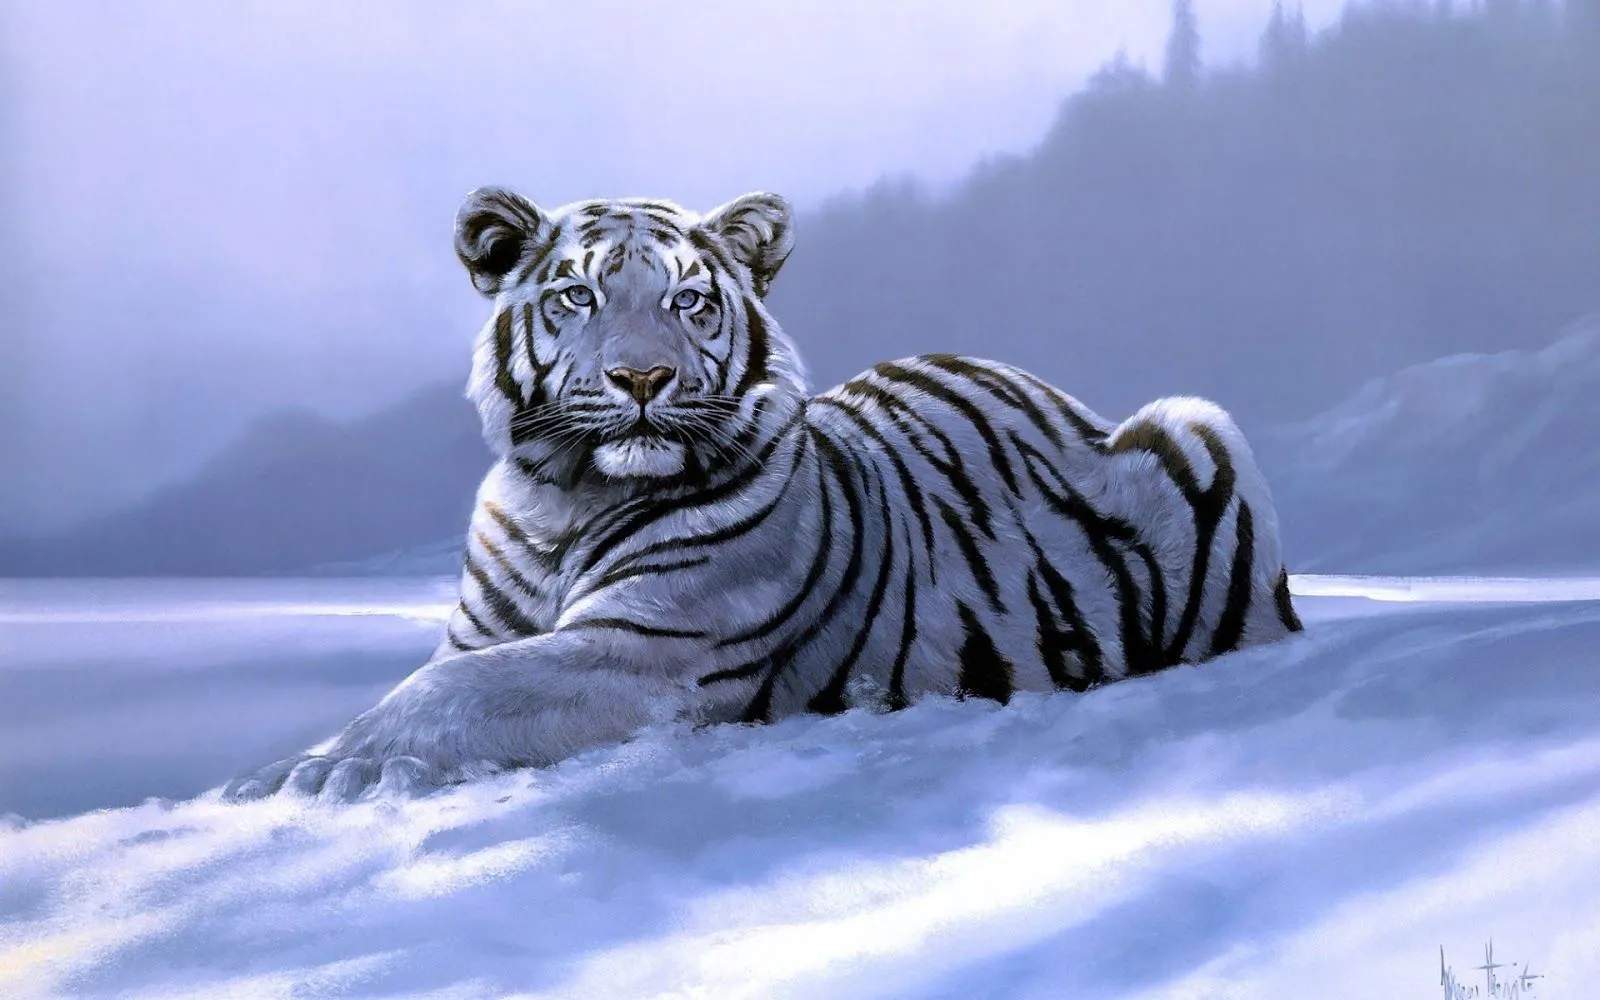 Fotos de Tigres en HD - Imagenes de Pantheras Tigris | Fotos e ...